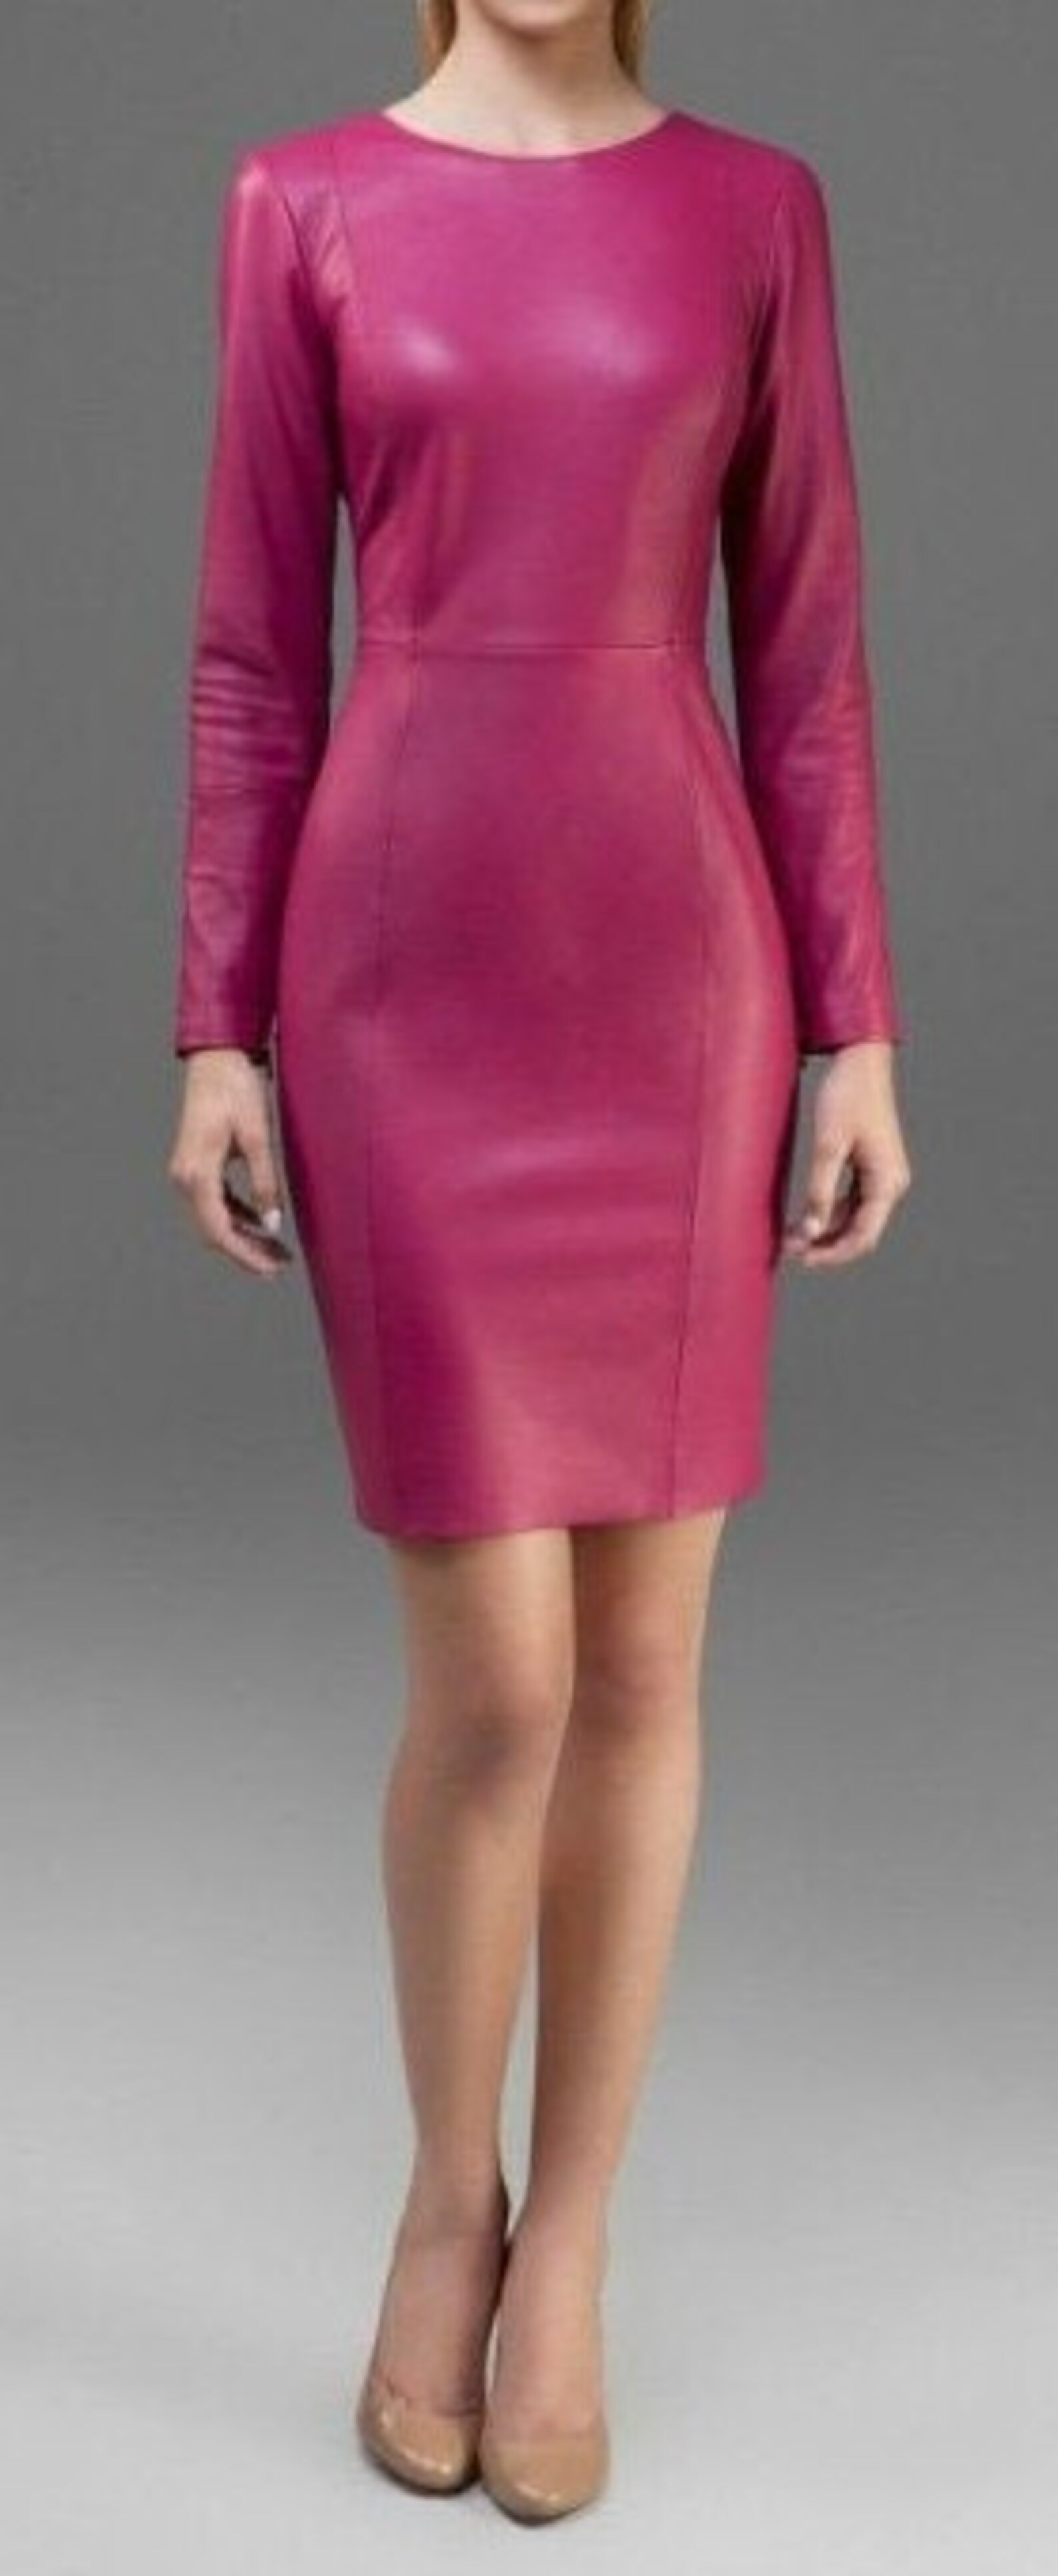 Hot Pink Leather Dress Women S Leather Dress Midi Etsy